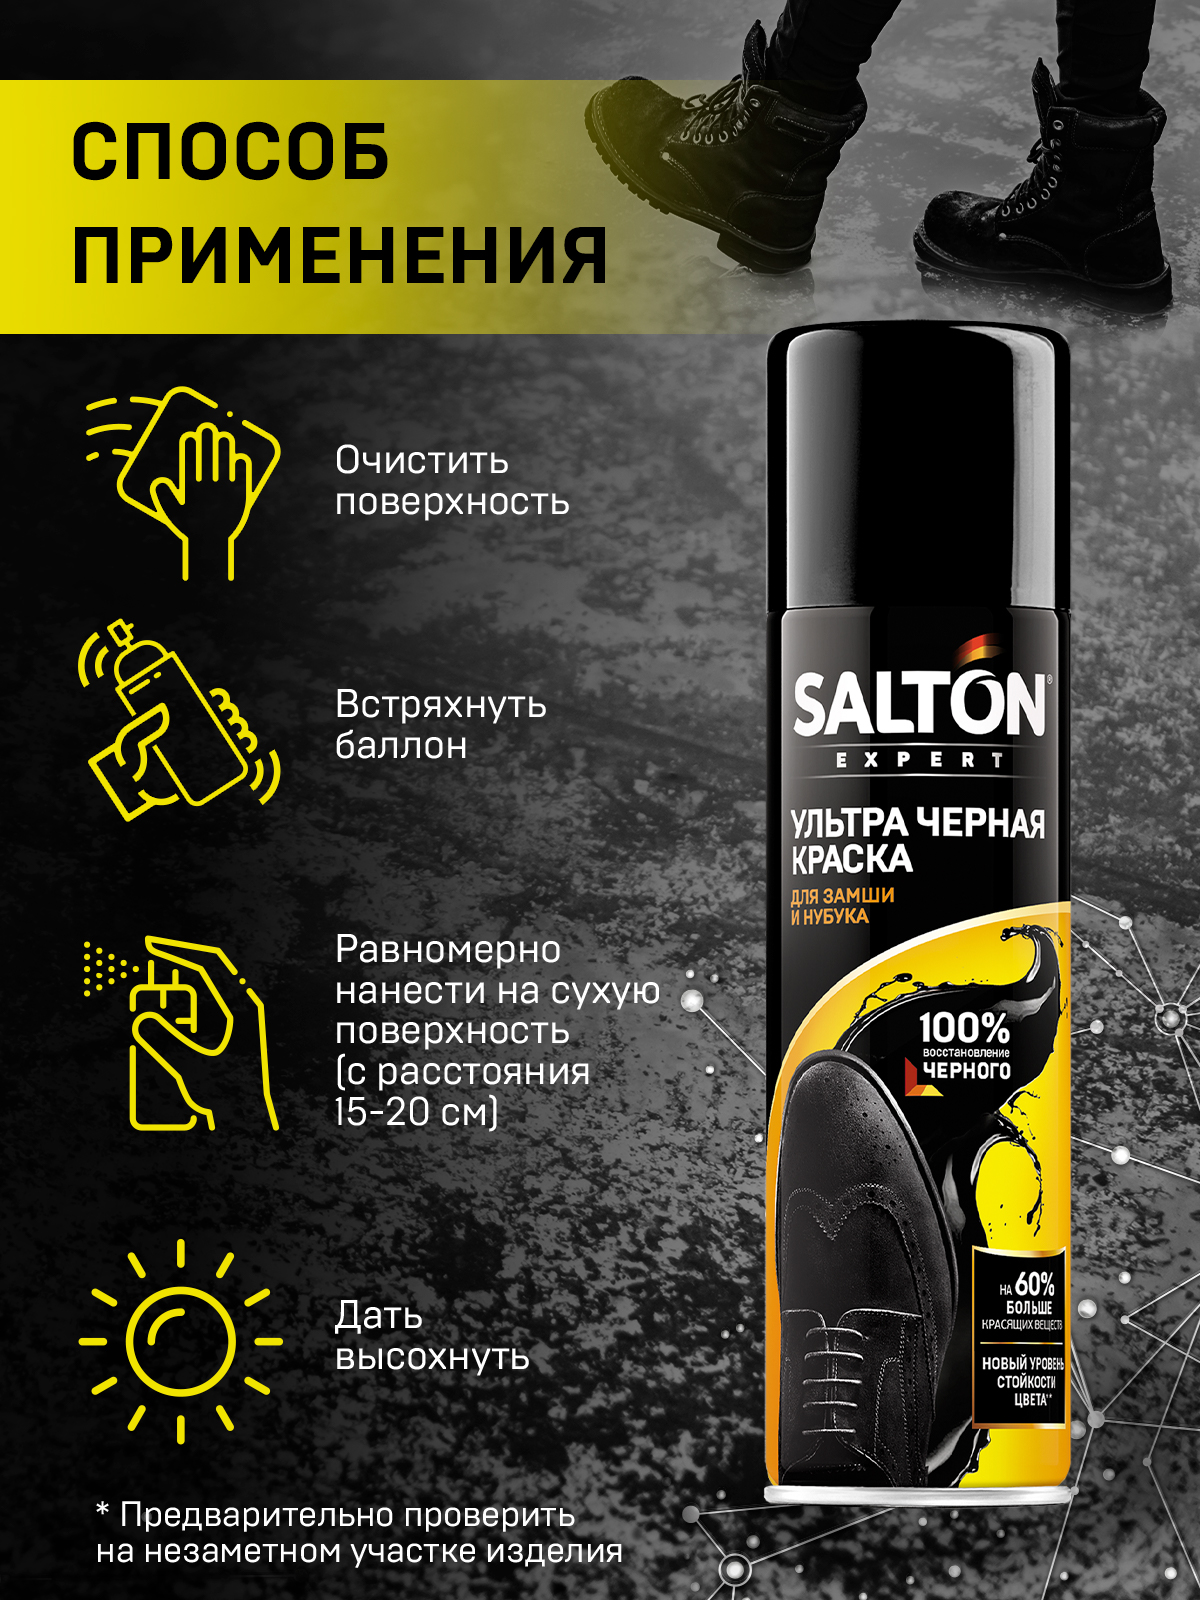 Краска для обуви Salton expert ультра-черная для замши 250 мл